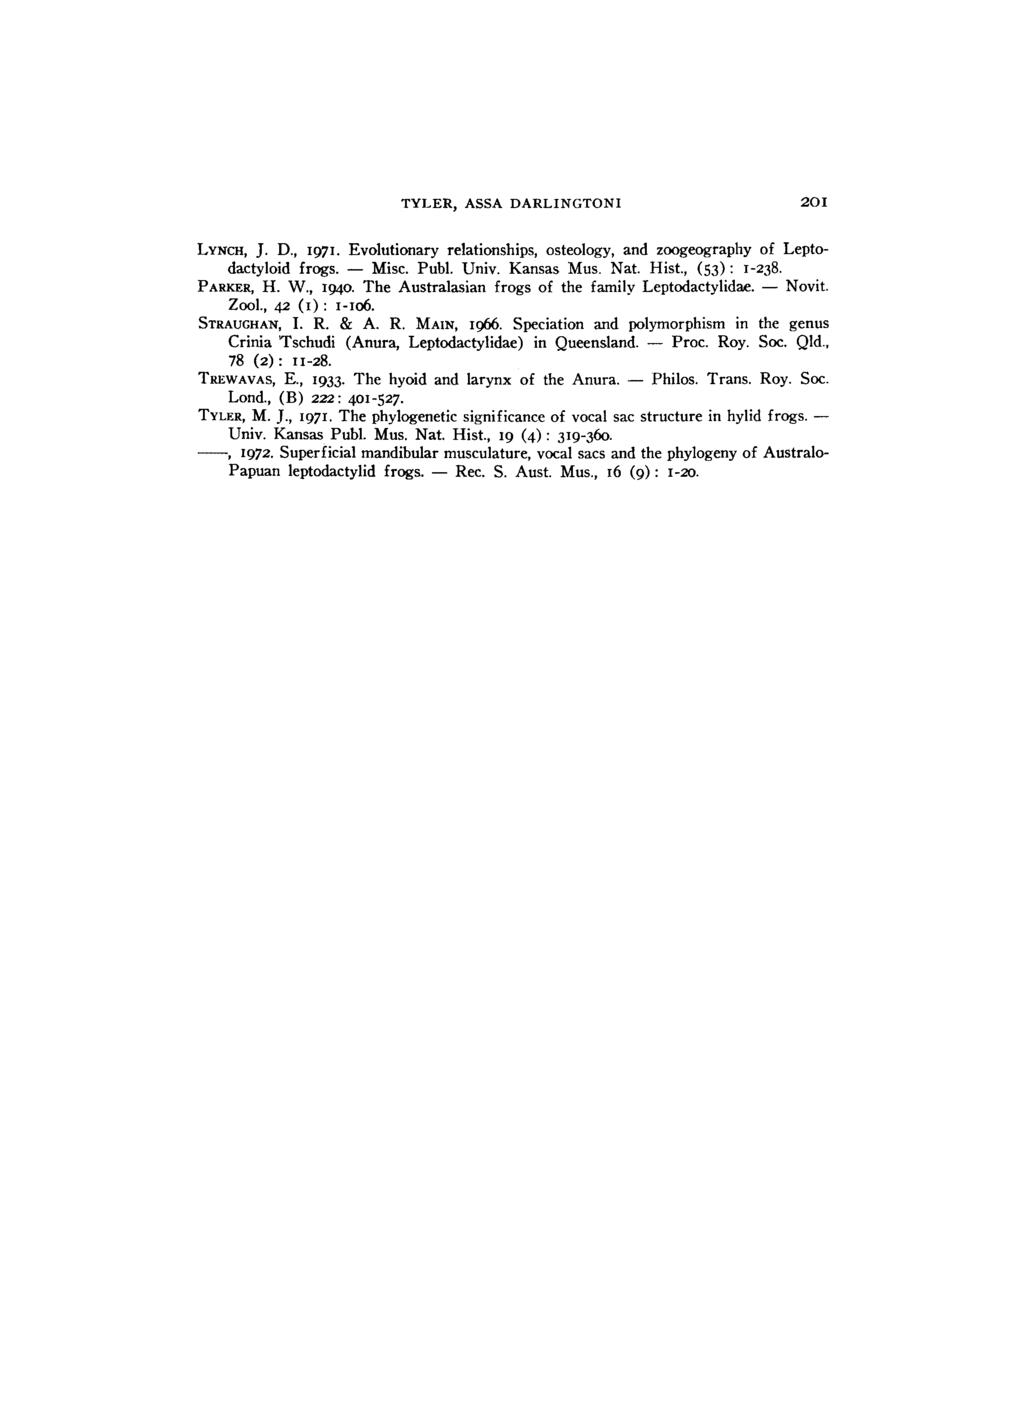 TYLER, ASSA DARLINGTONI 201 LYNCH, J. D., 1971. Evolutionary relationships, osteology, and zoogeography of Leptodactyloid frogs. Misc. Publ. Univ. Kansas Mus. Nat. Hist., (53) : 1-238. PARKER, H. W.